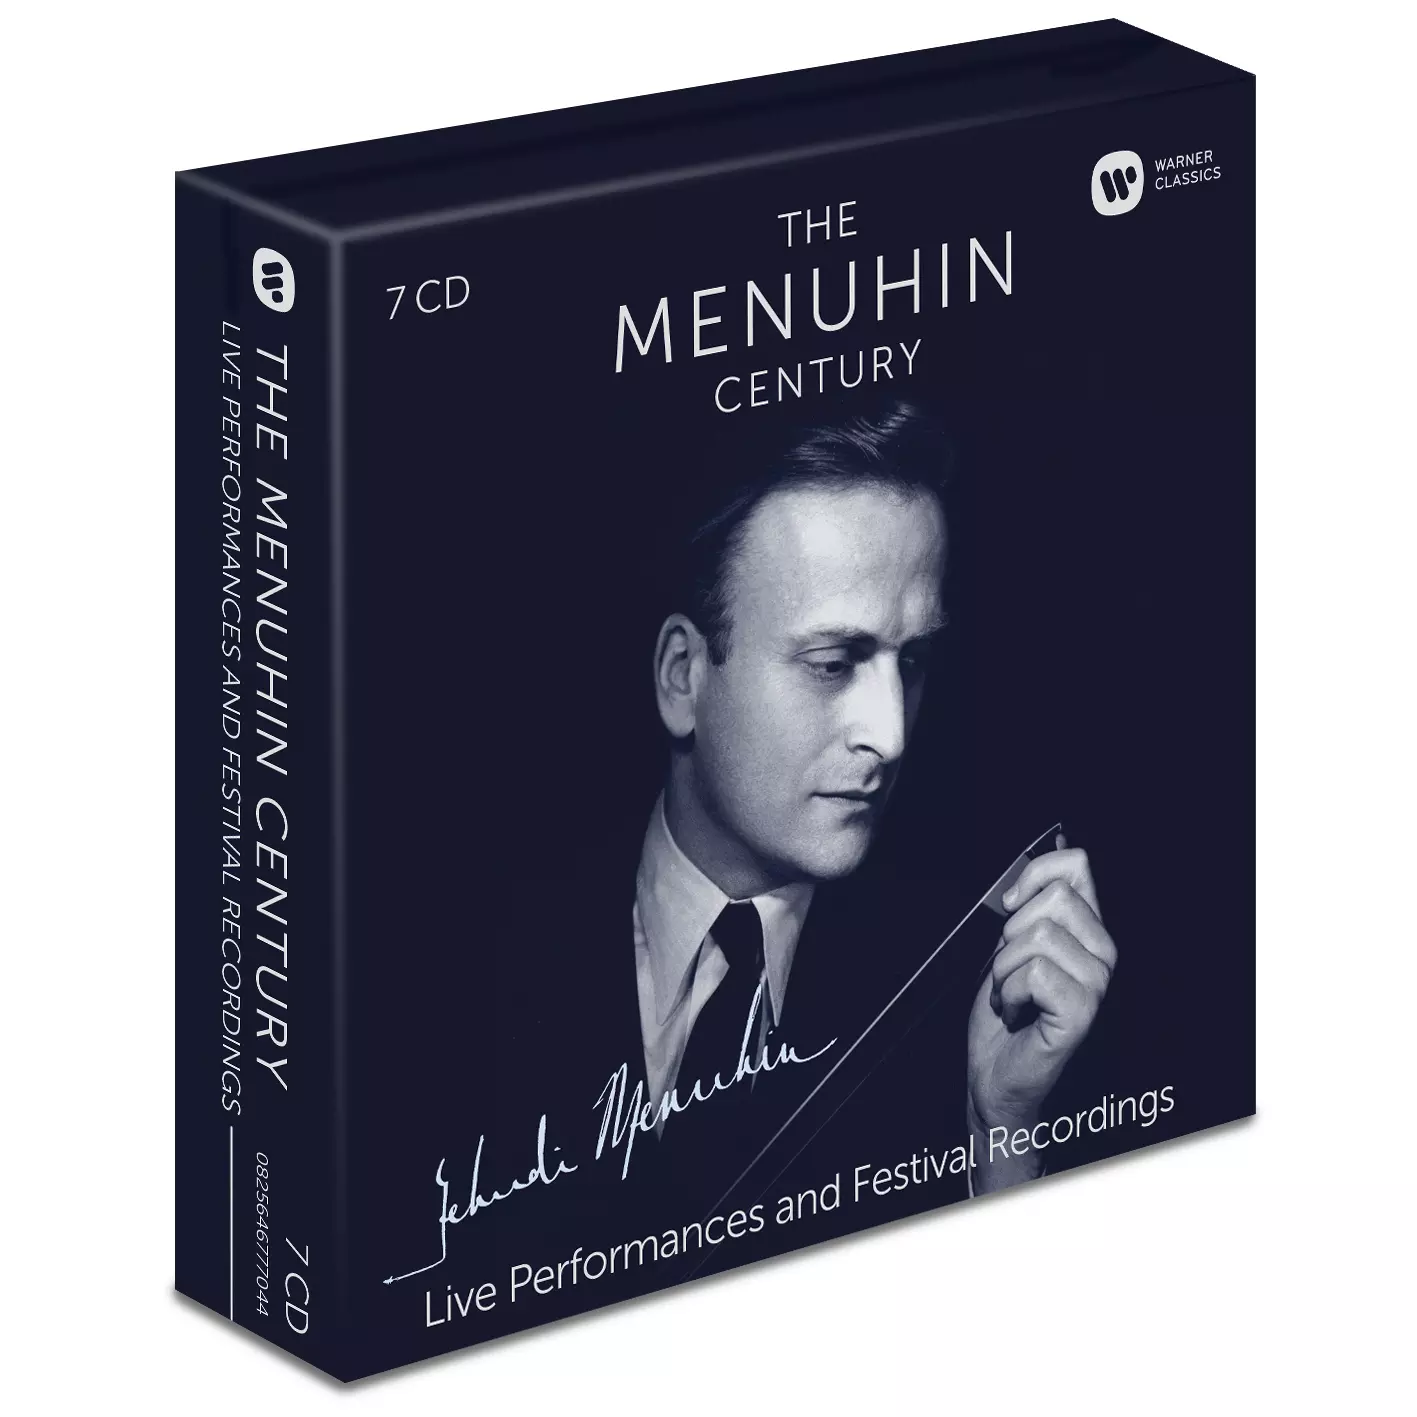 The Menuhin Century: Live Performances and Festival Recordings